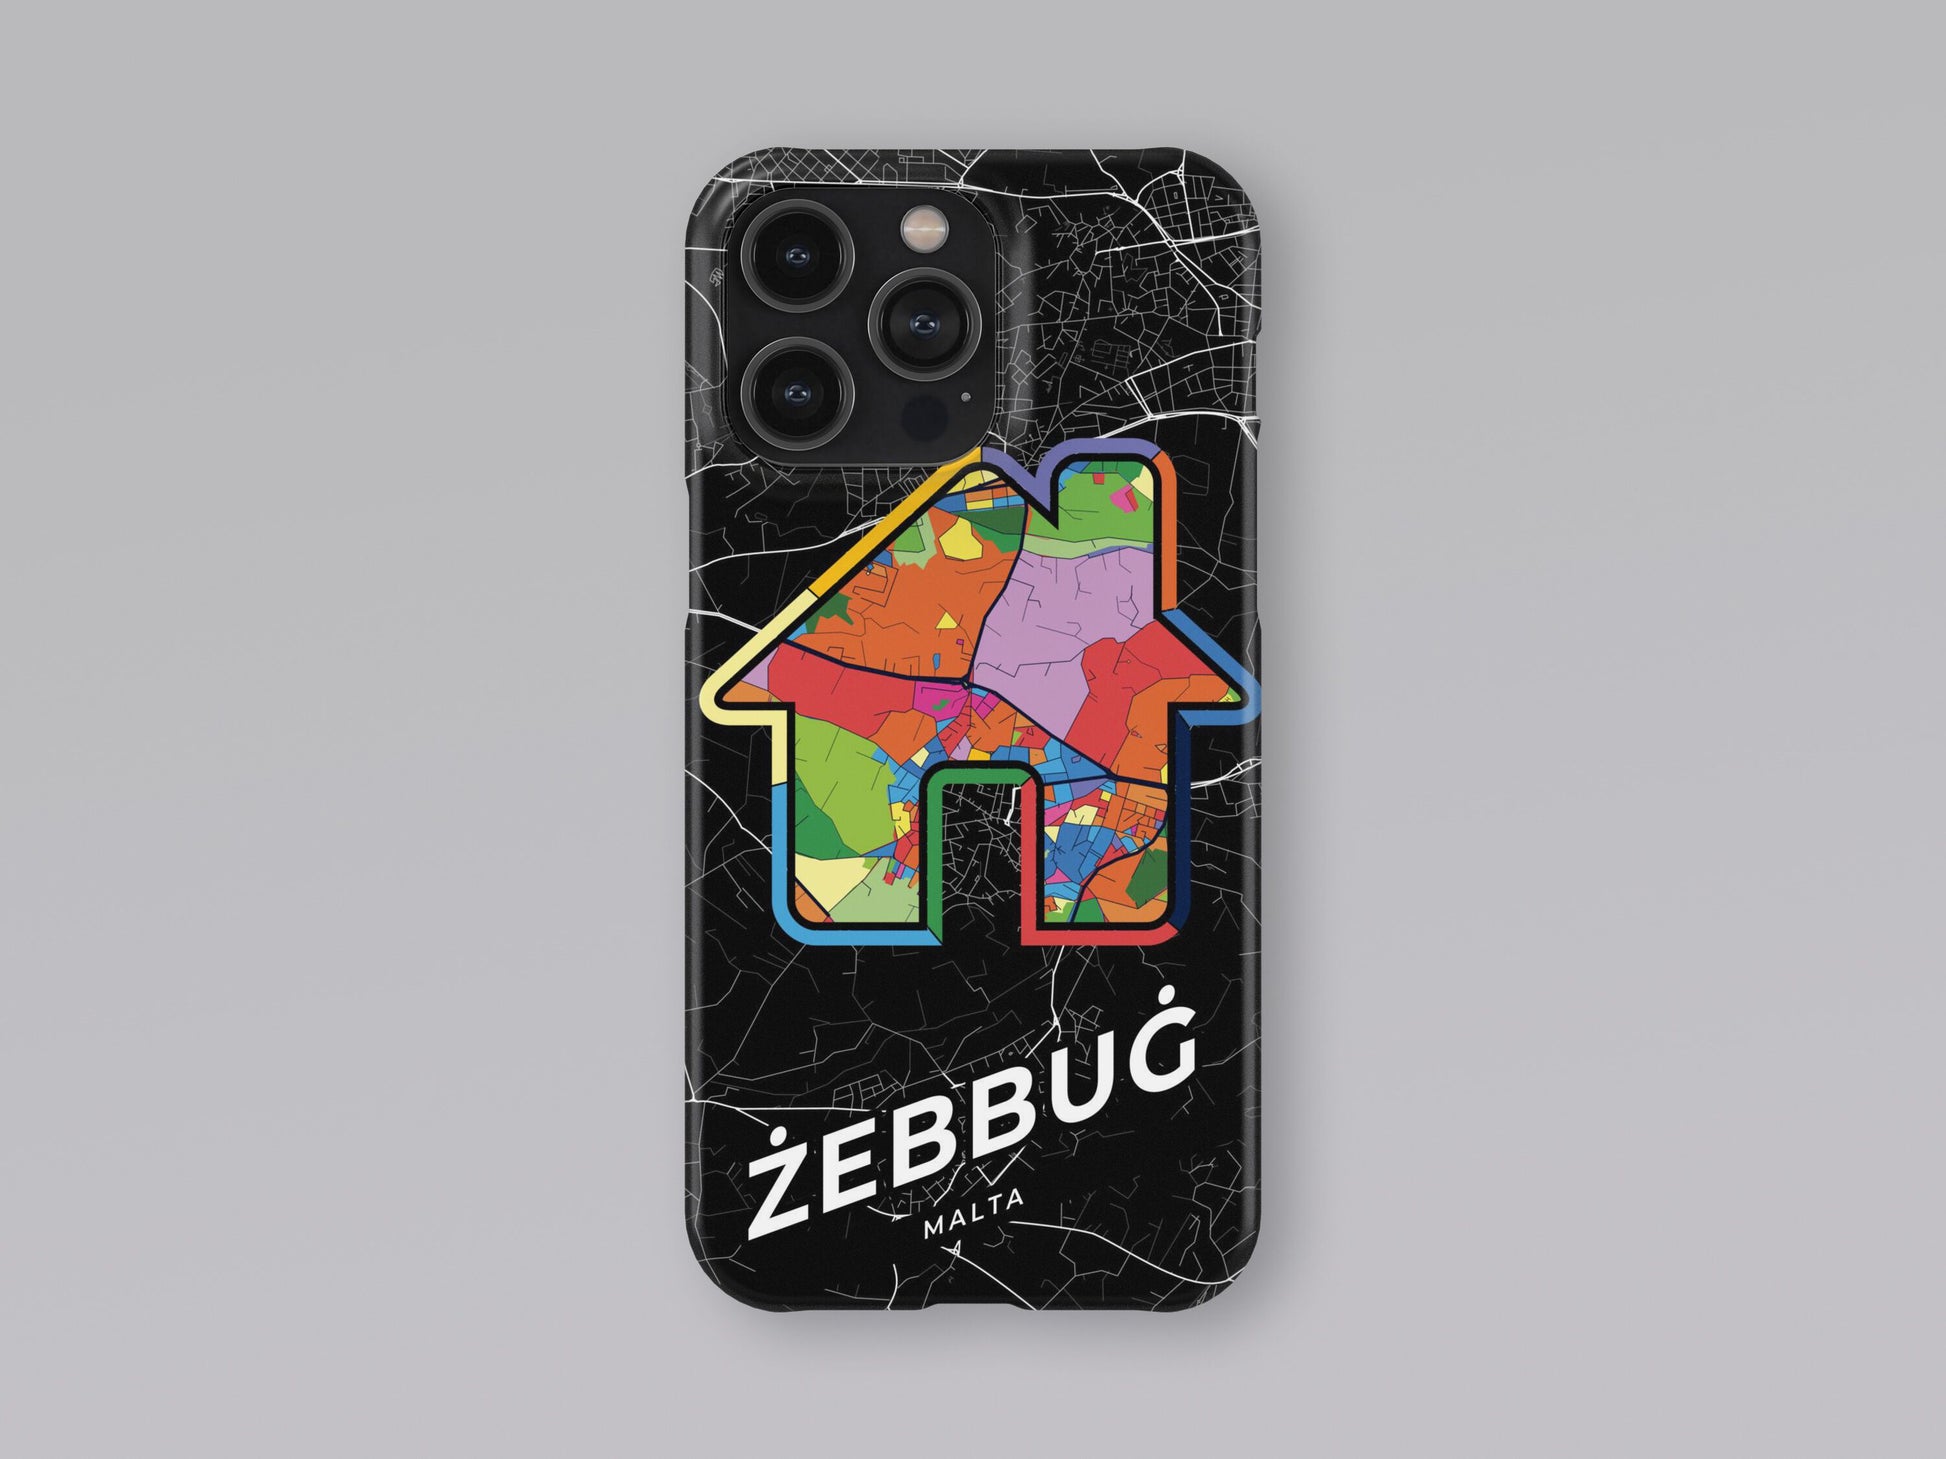 Żebbuġ Malta slim phone case with colorful icon 3